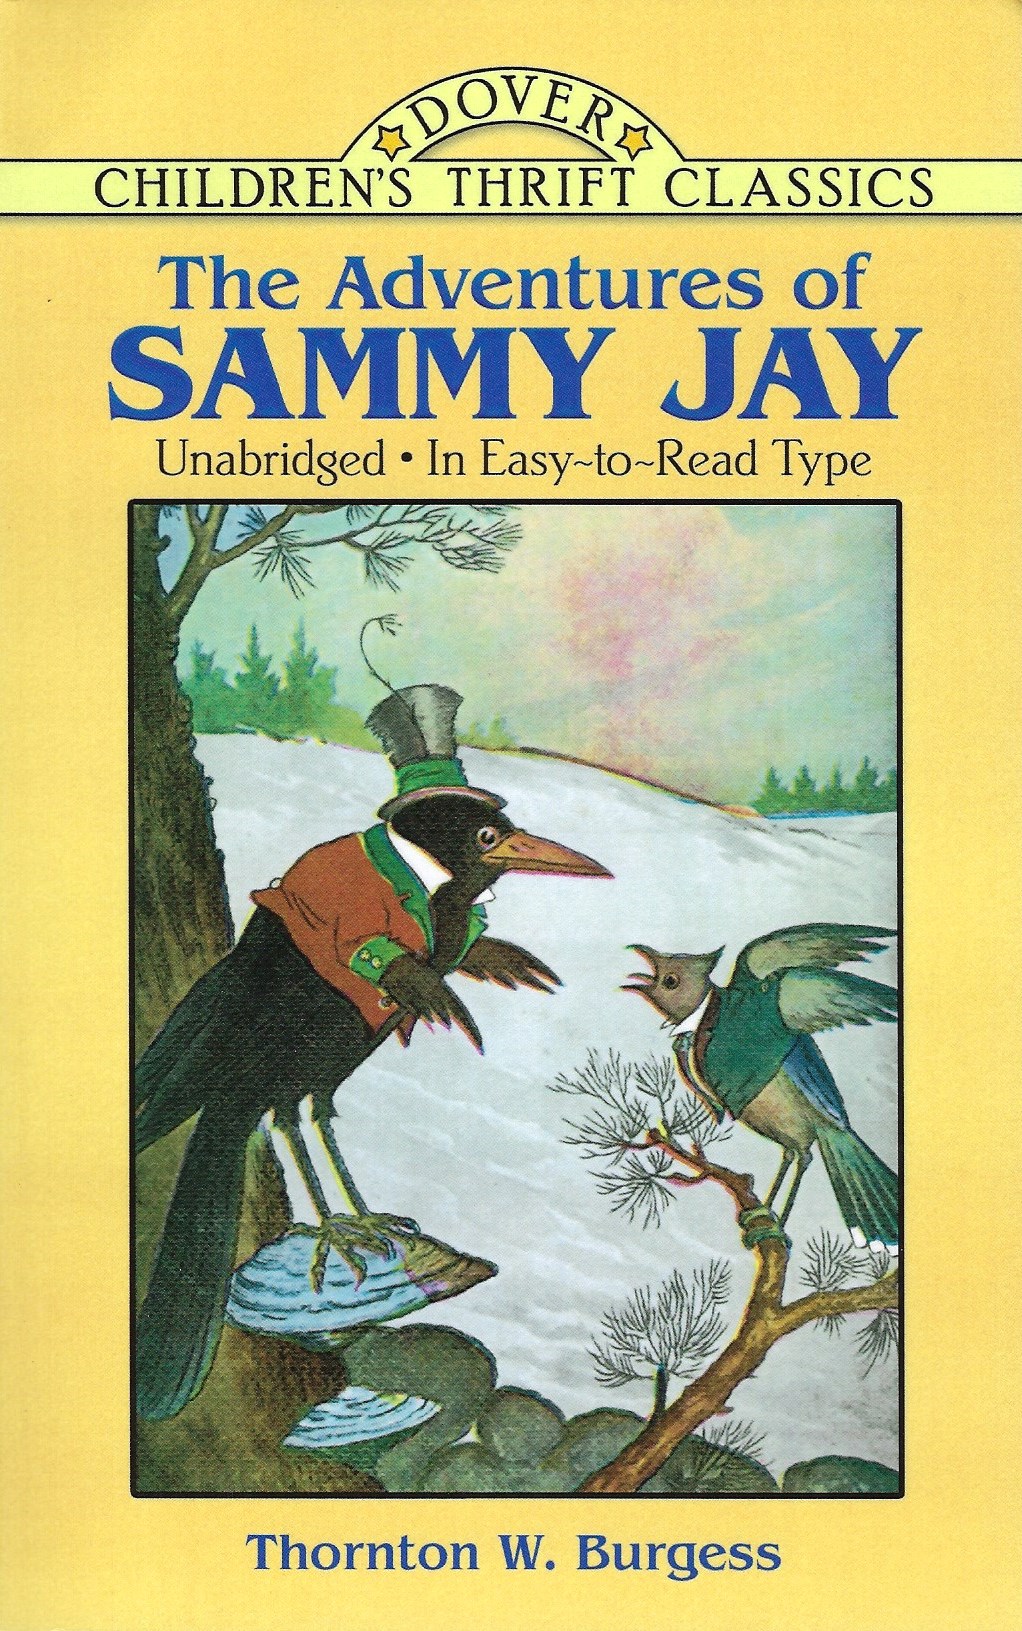 THE ADVENTURES OF SAMMY JAY Thornton W. Burgess